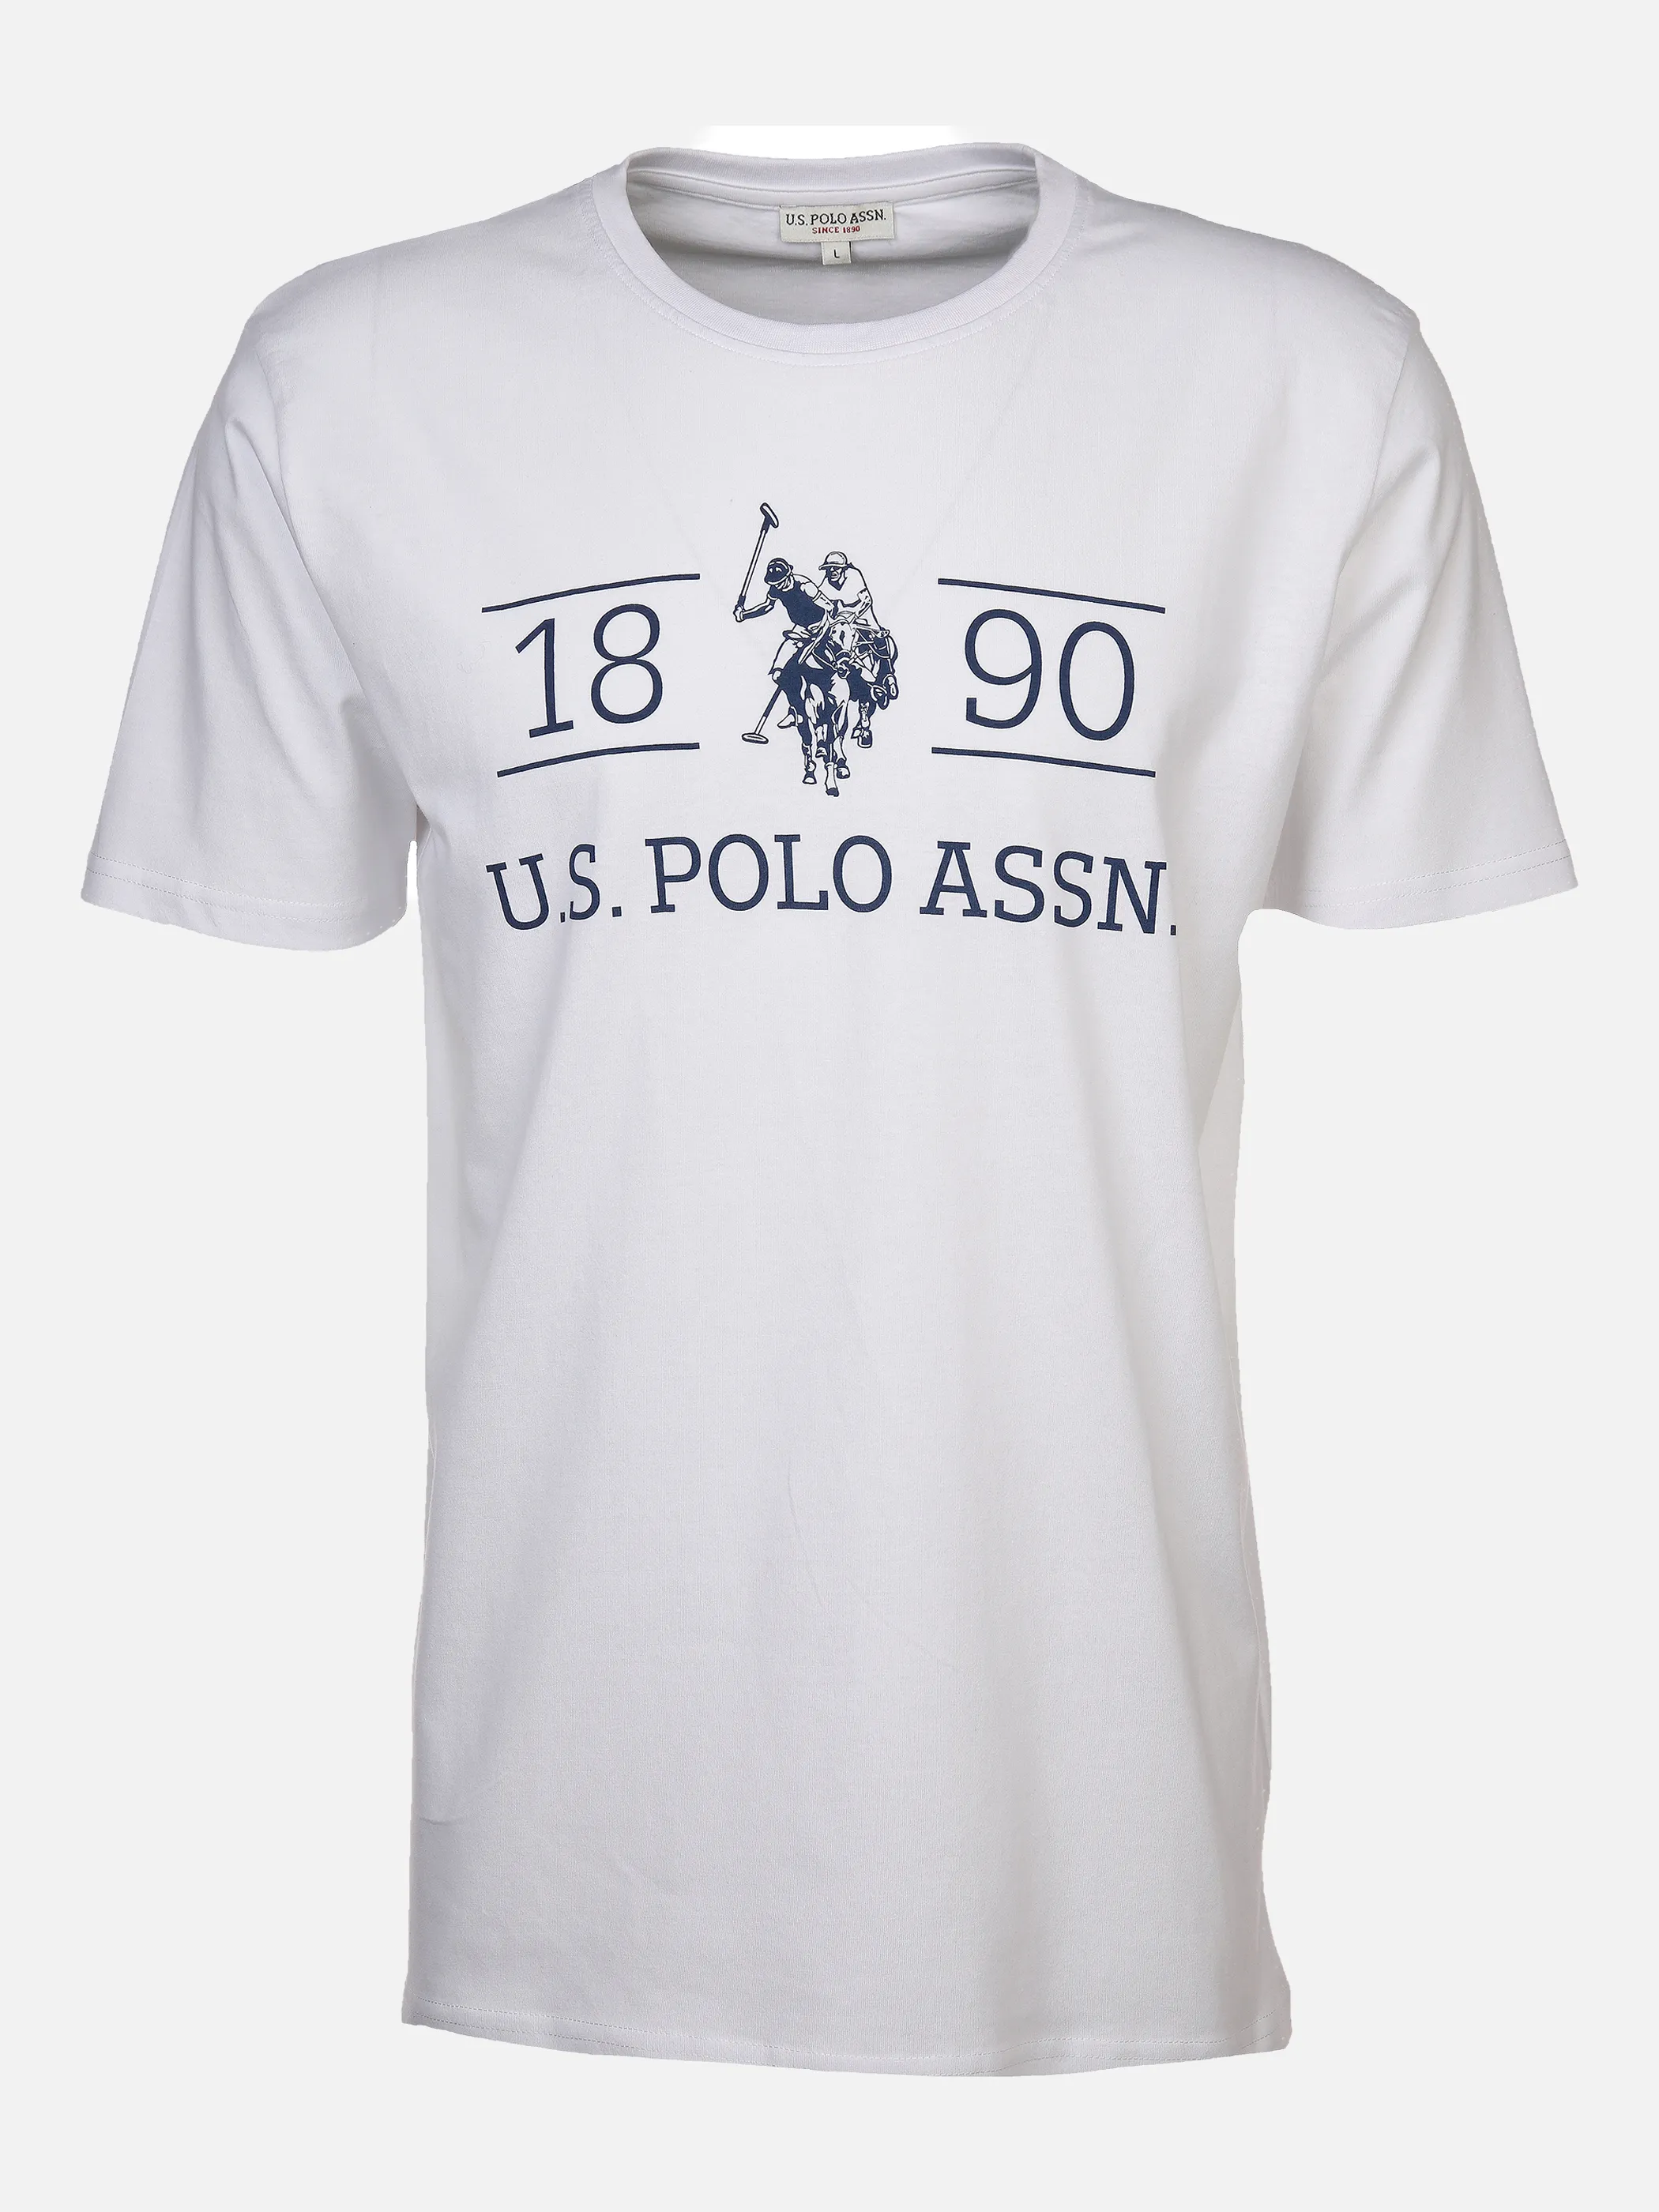 U.S. Polo Assn. He. T-Shirt 1/2 Arm Logo 1890 Weiß 881277 WHITE 1